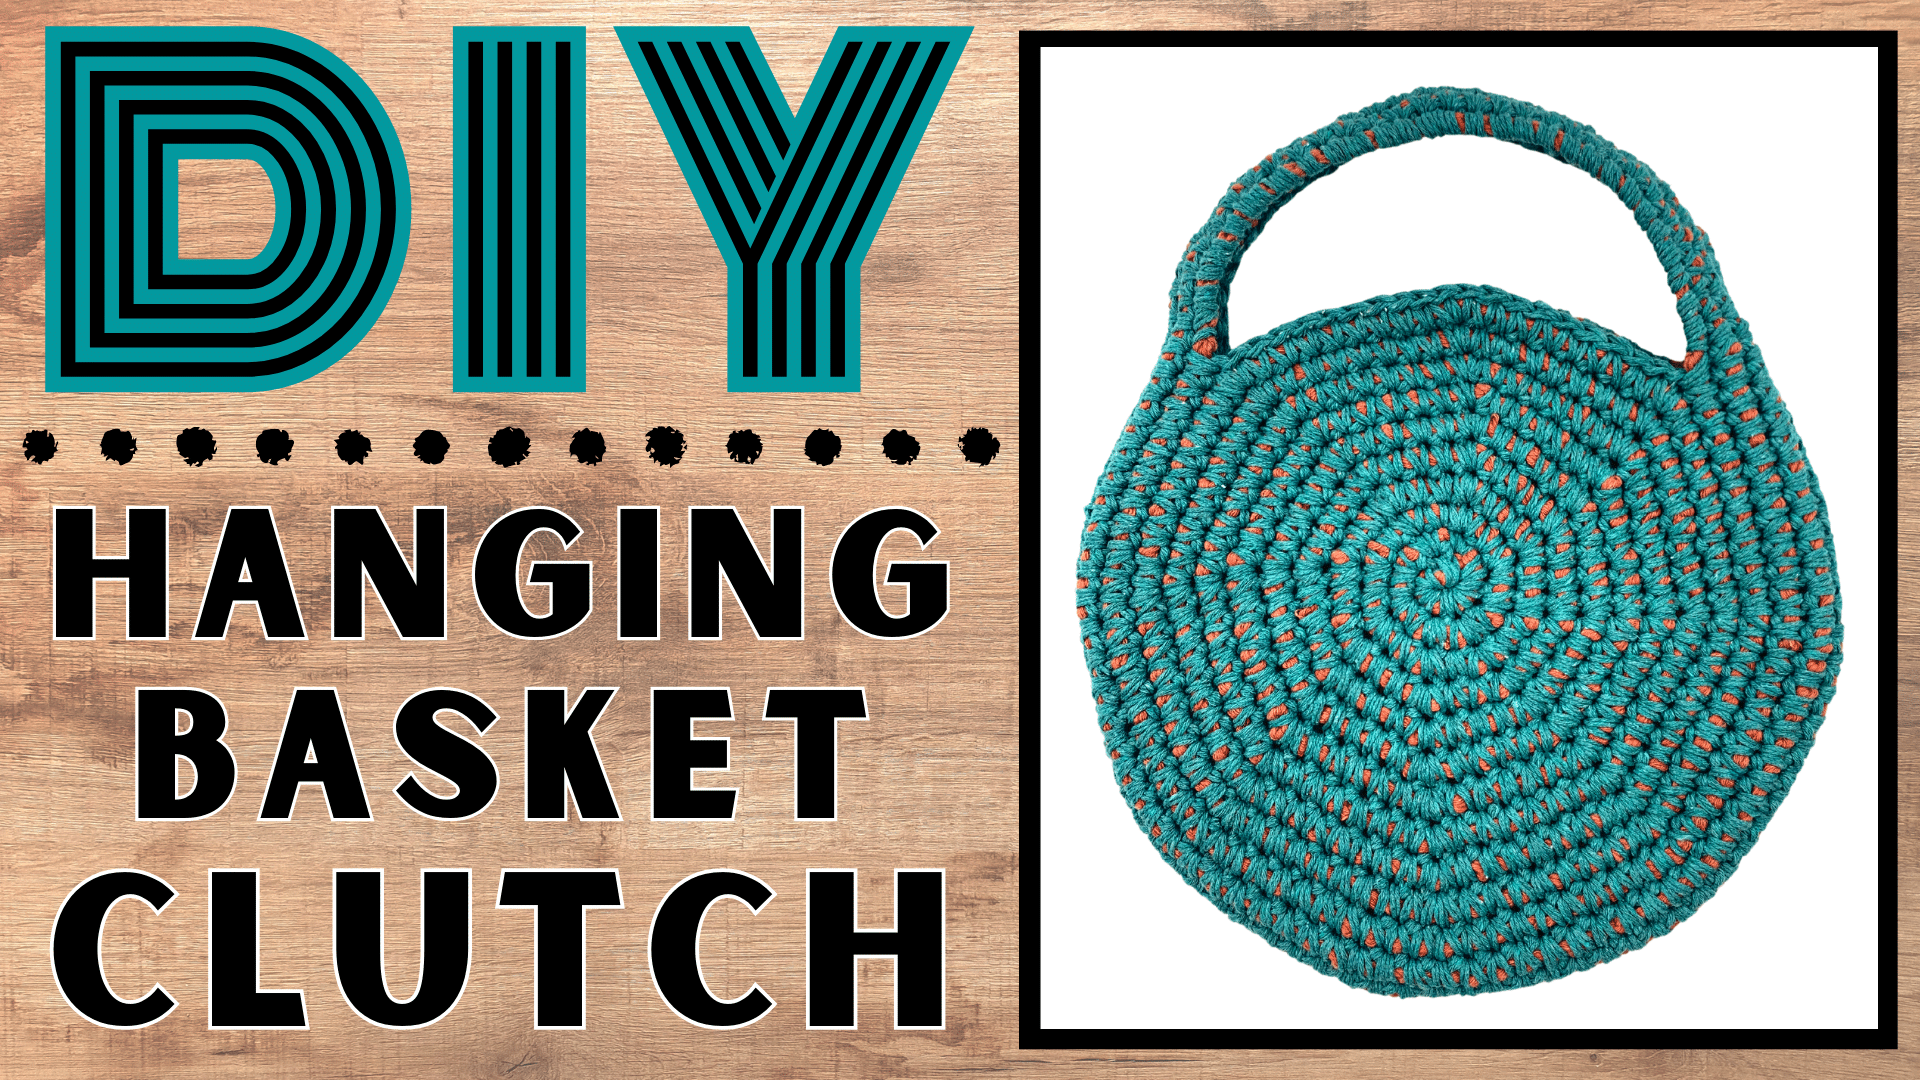 Easy Bag Making With This DIY Circle Purse Tutorial - Creative Fashion Blog